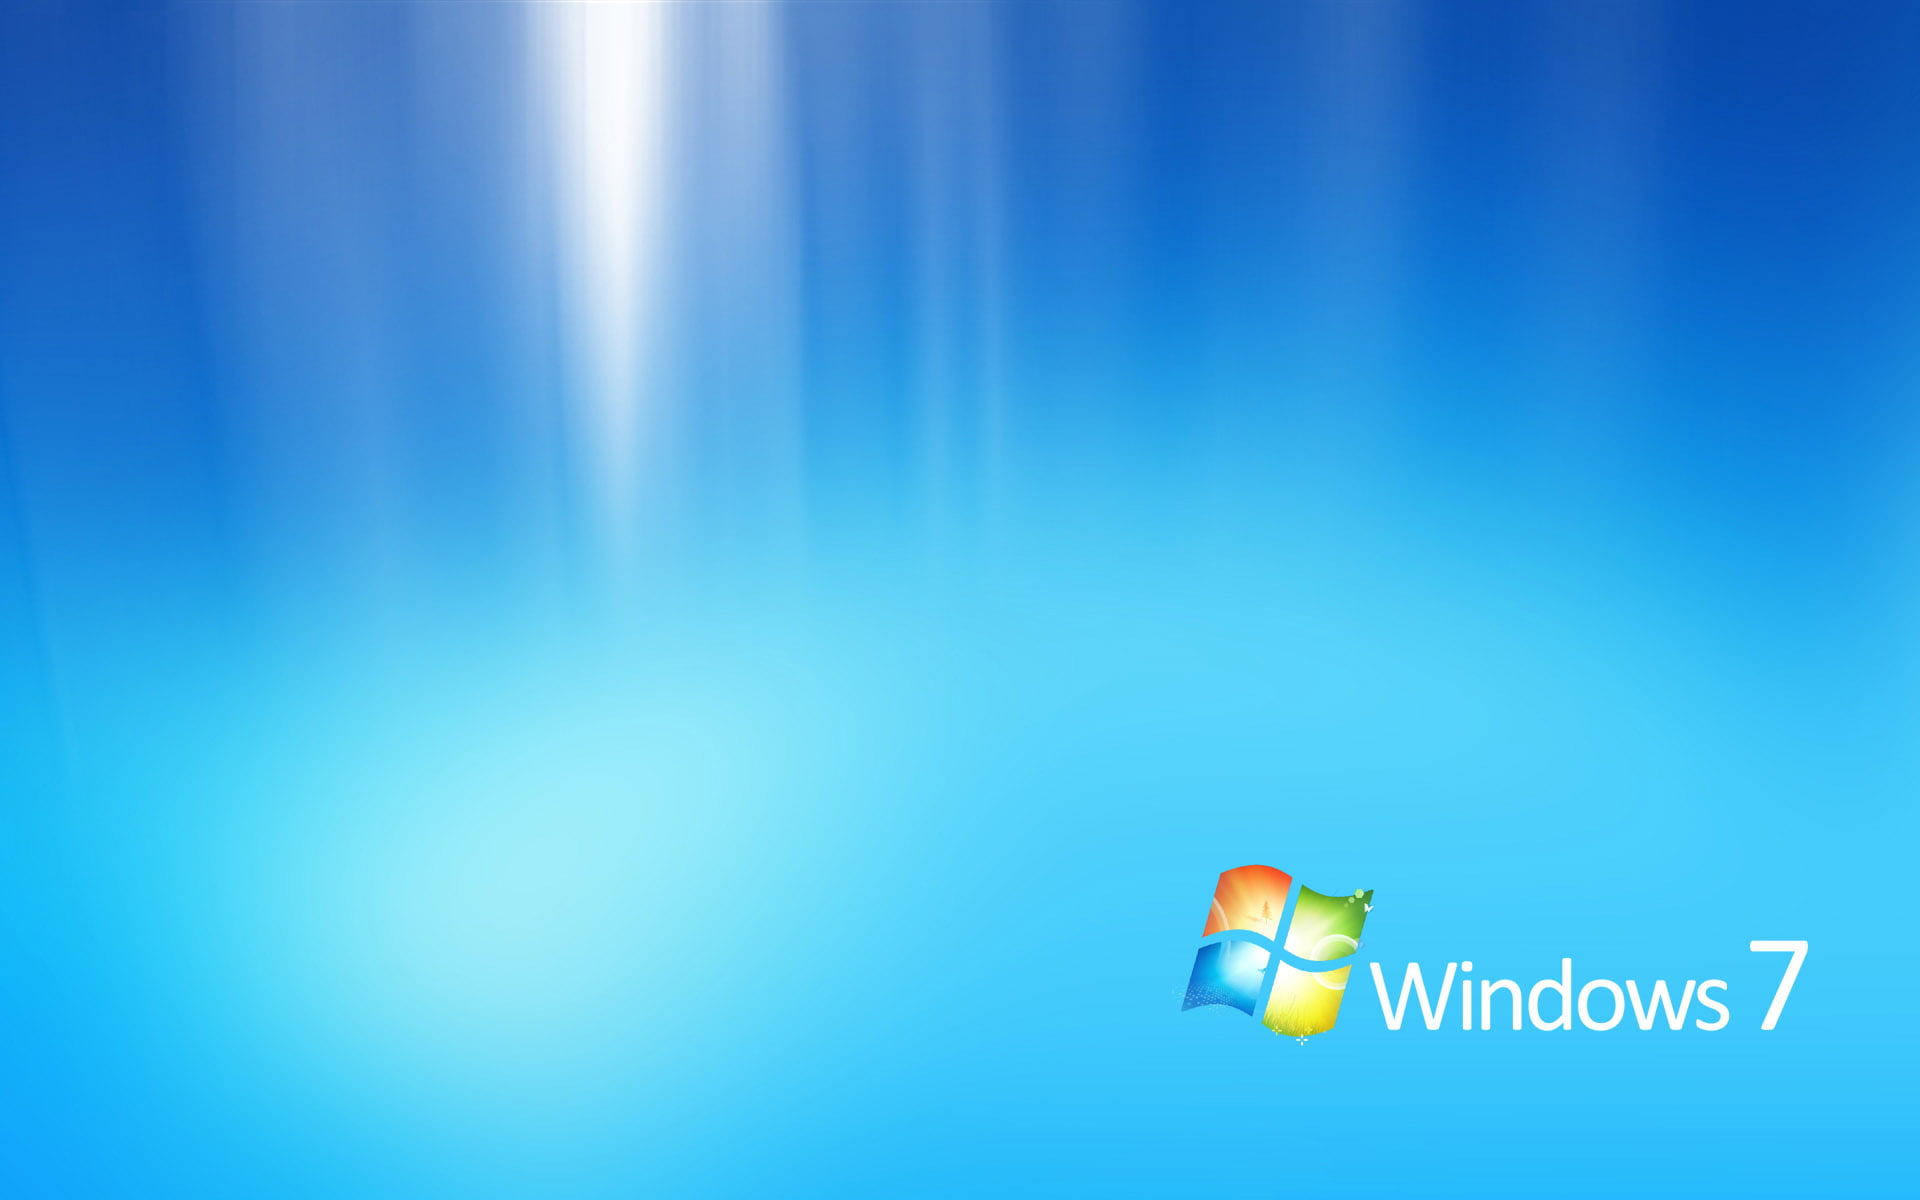 Windows 7 Light Blue, Windows 7 wallpaper, Computers, microsoft